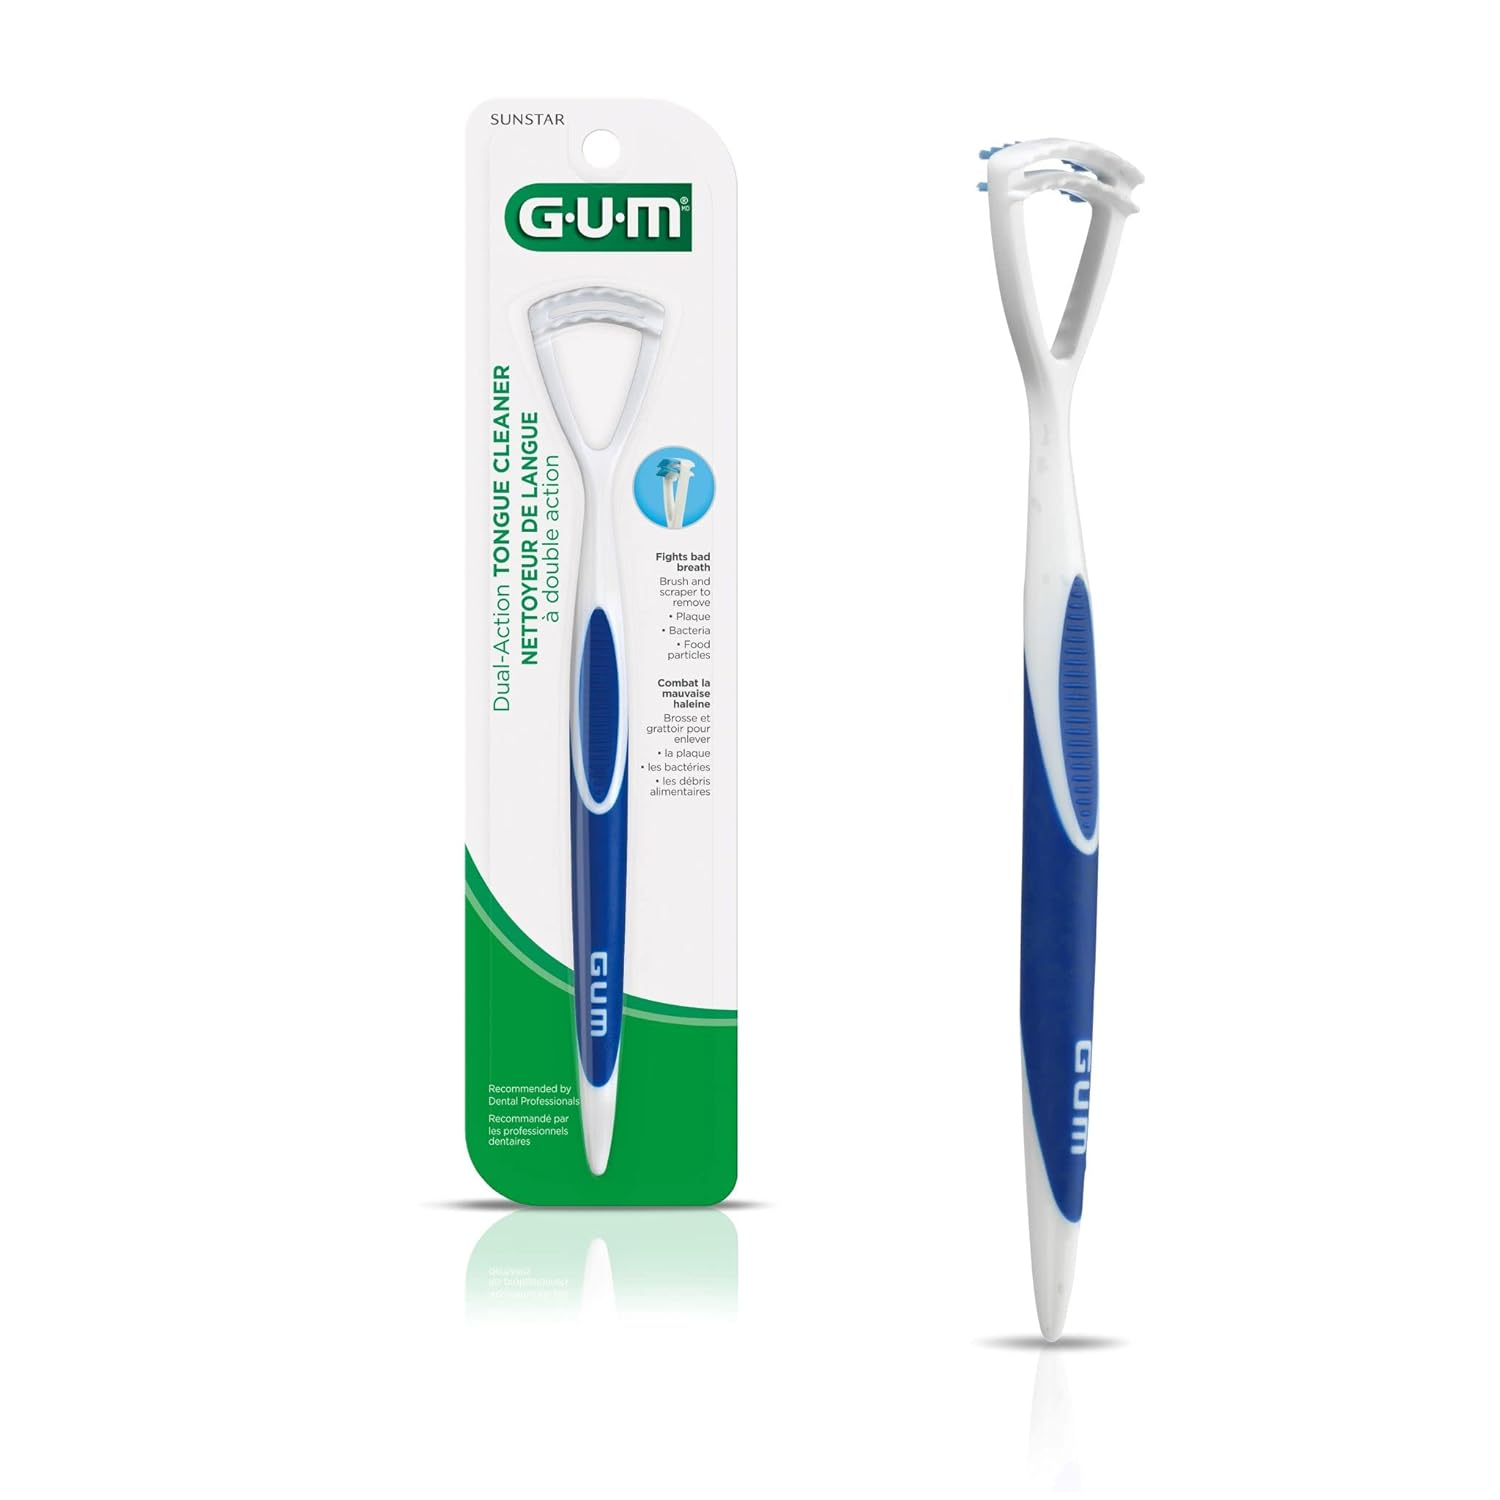 GUM Sunstar Dual Action Tongue Scraper and Cleaner Brush